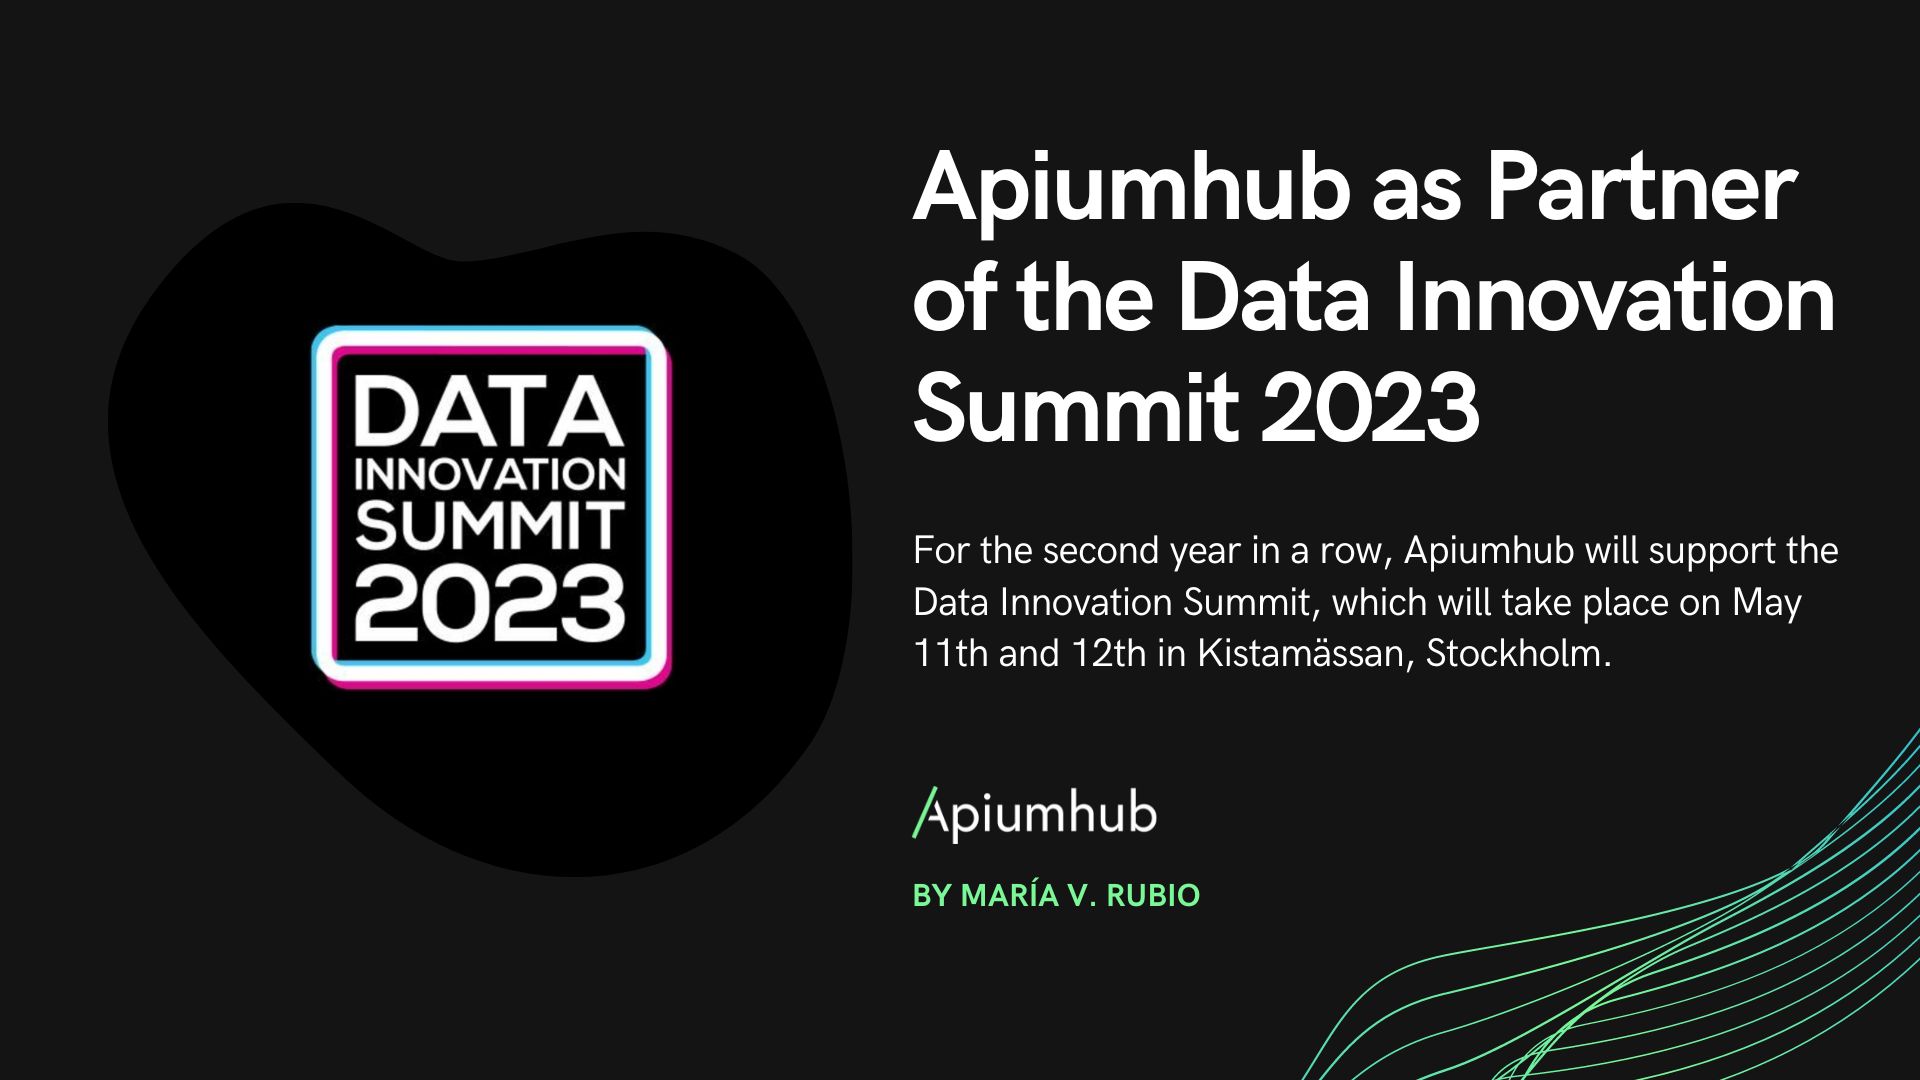 Apiumhub as partner of the Data Innovation Summit 2023